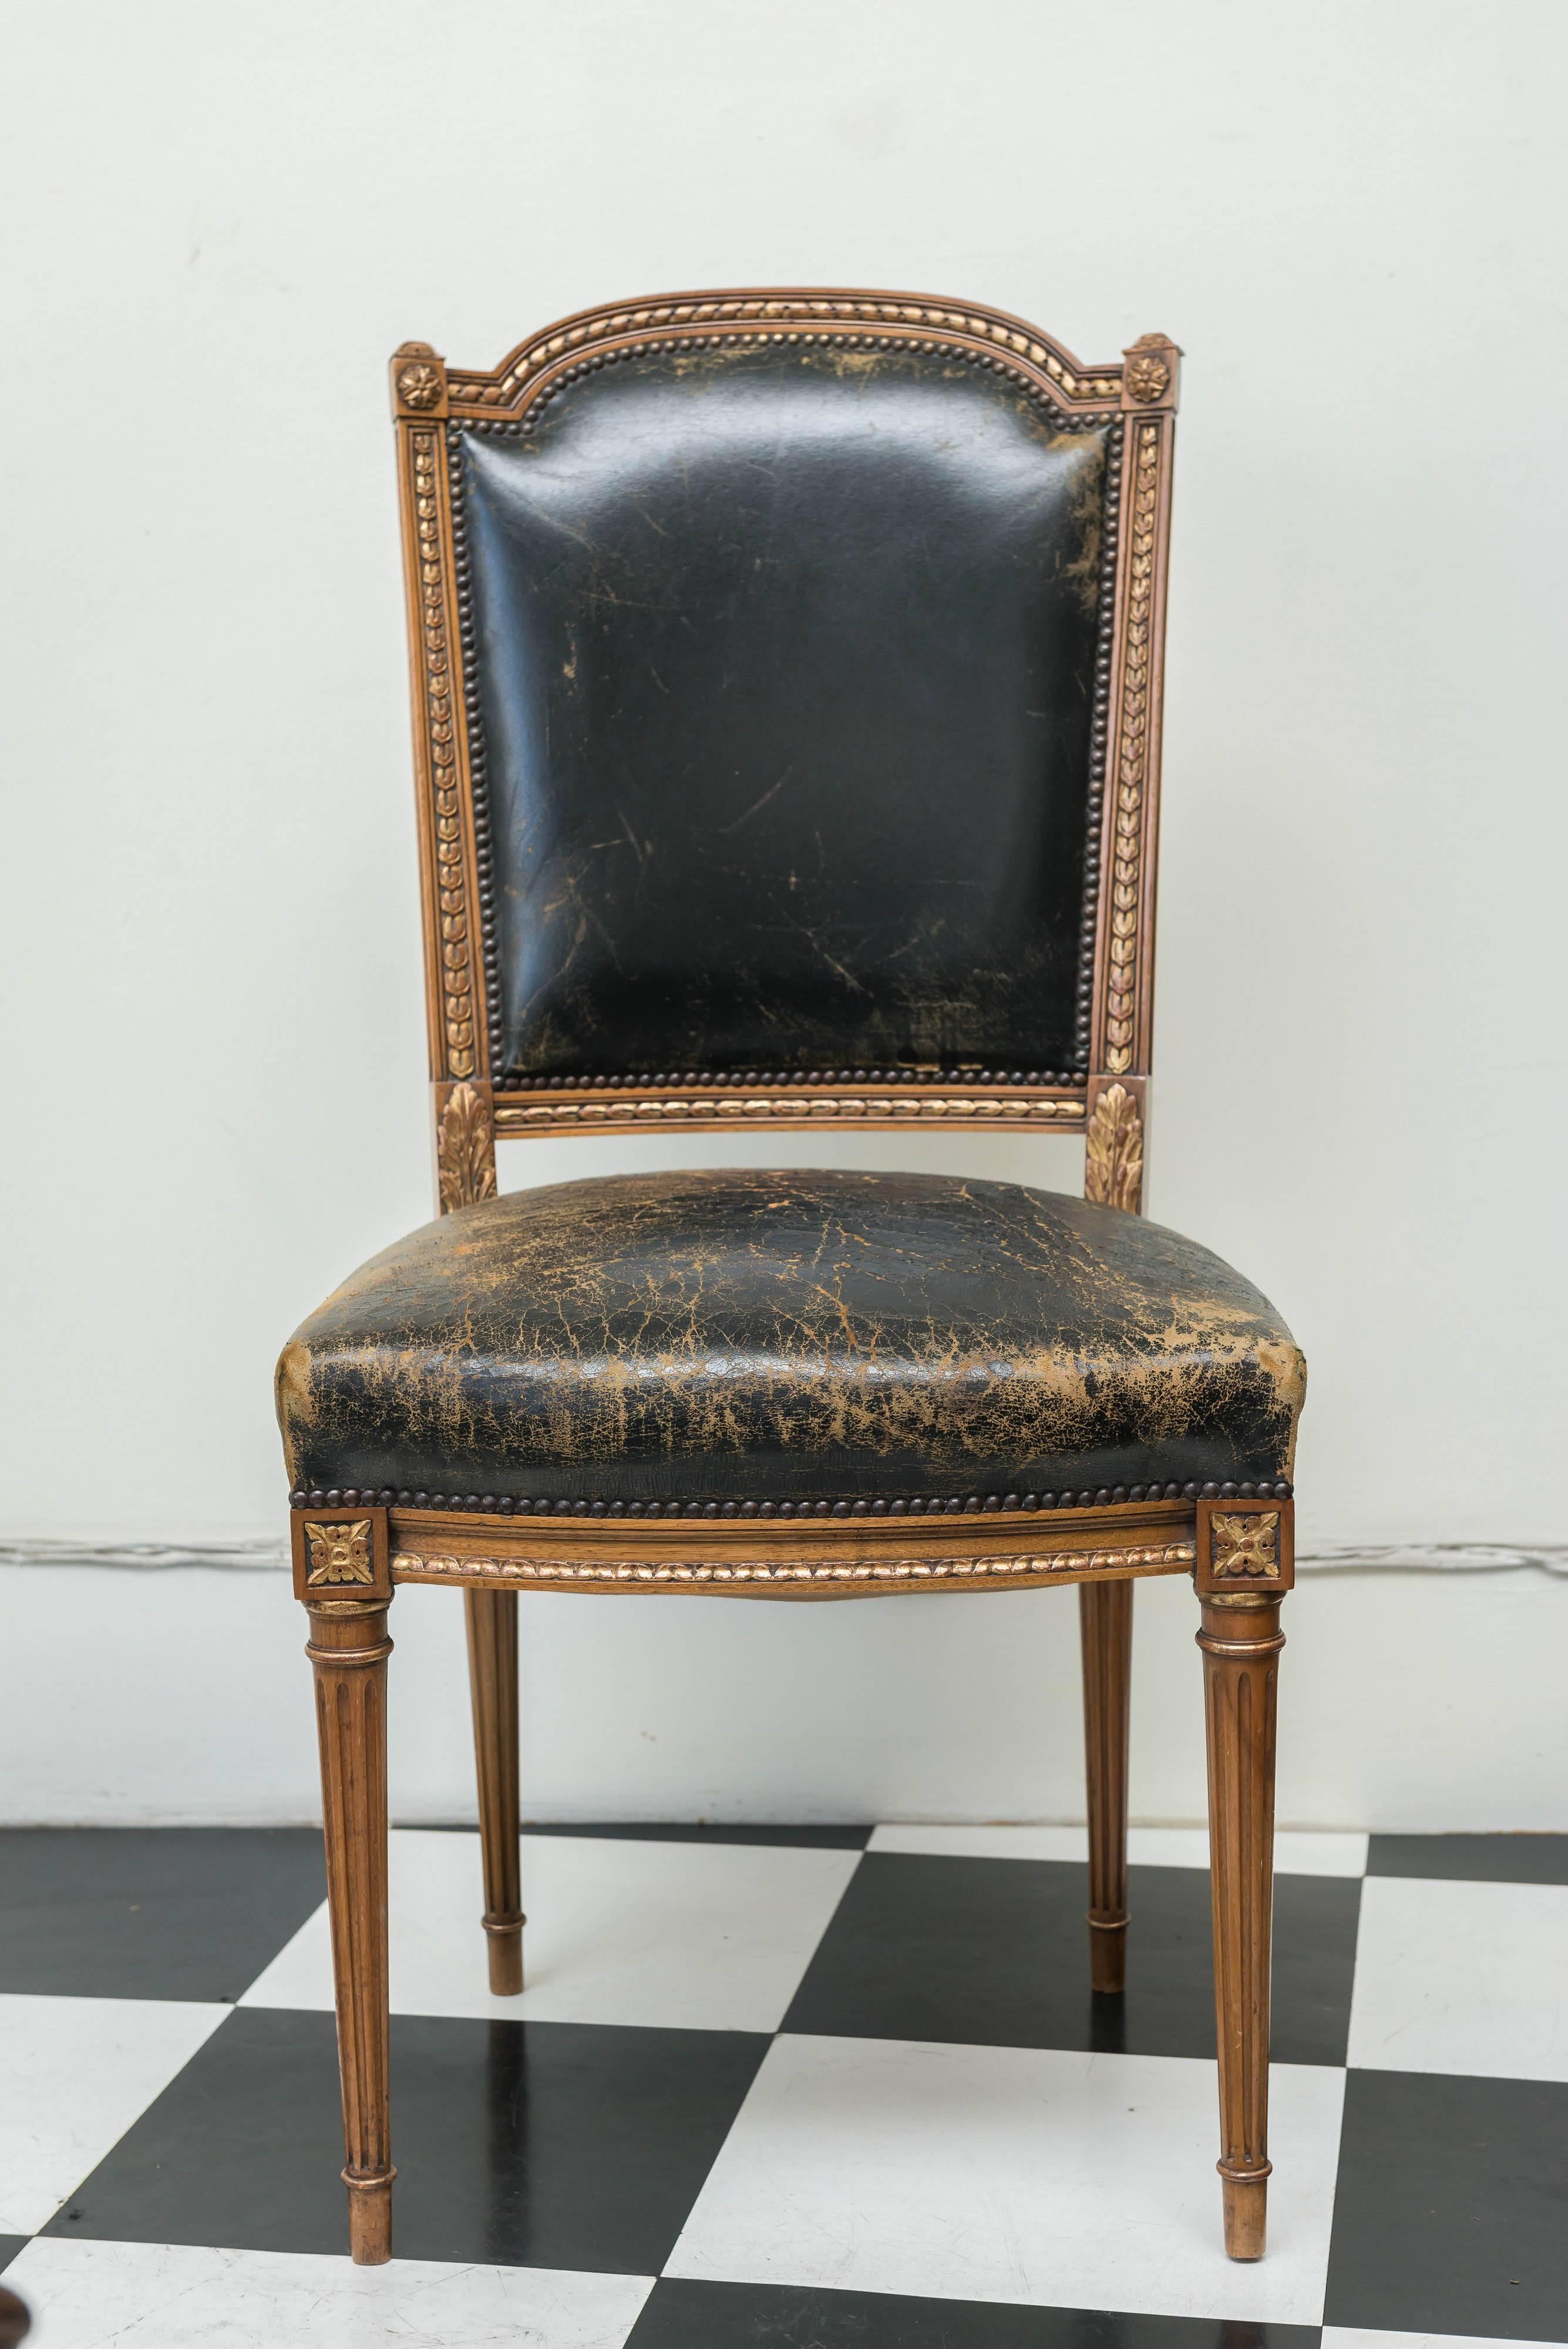 Spanish Louis XVI Revival Style Chair by Simon Loscertales Bona, Zaragosa, Spain